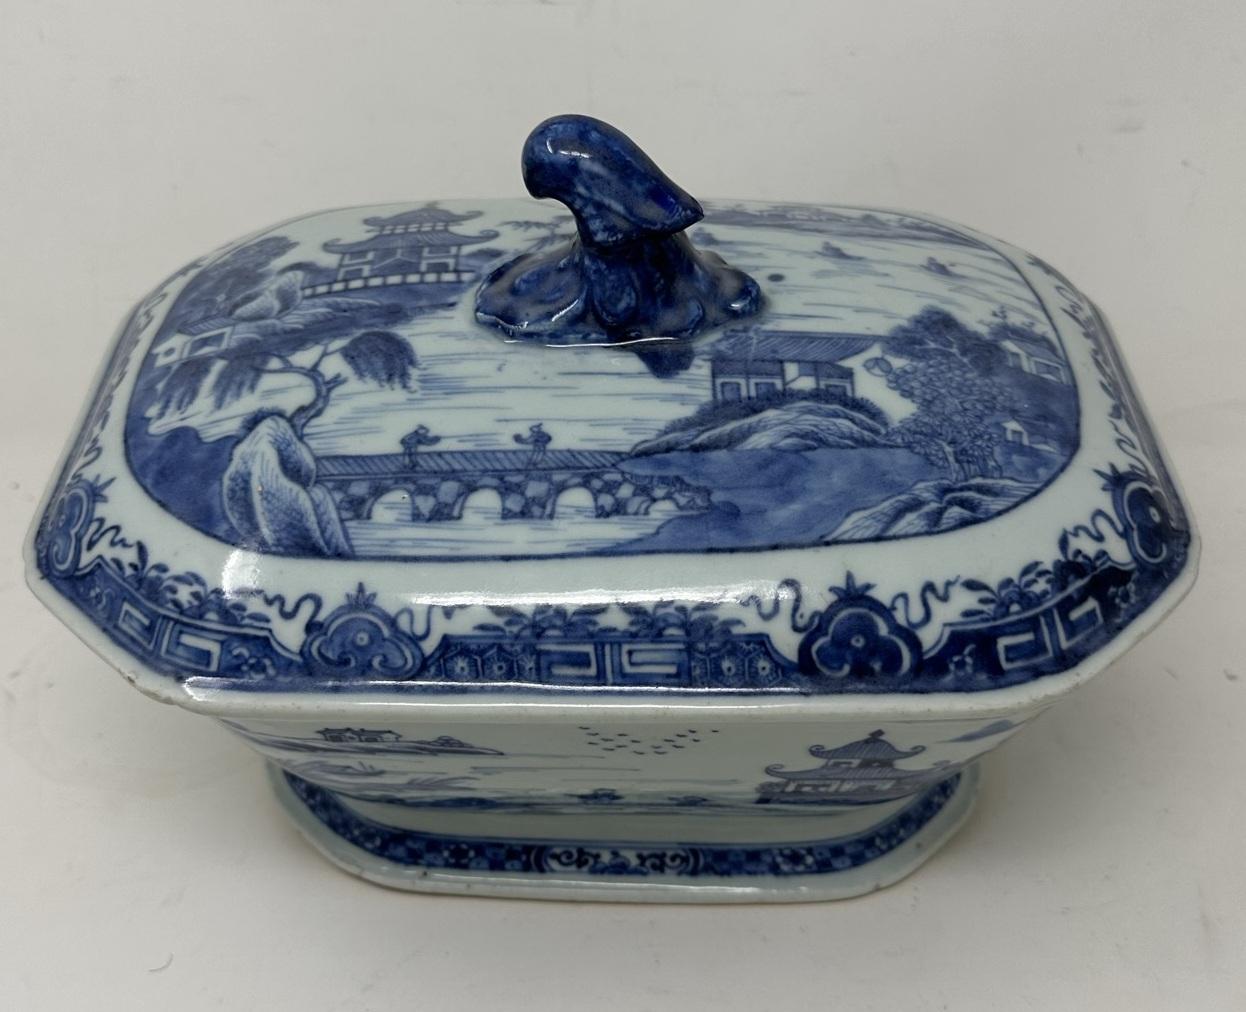 18th Century Antique Chinese Export Porcelain Blue White Chien Lung Soup Tureen Centerpiece